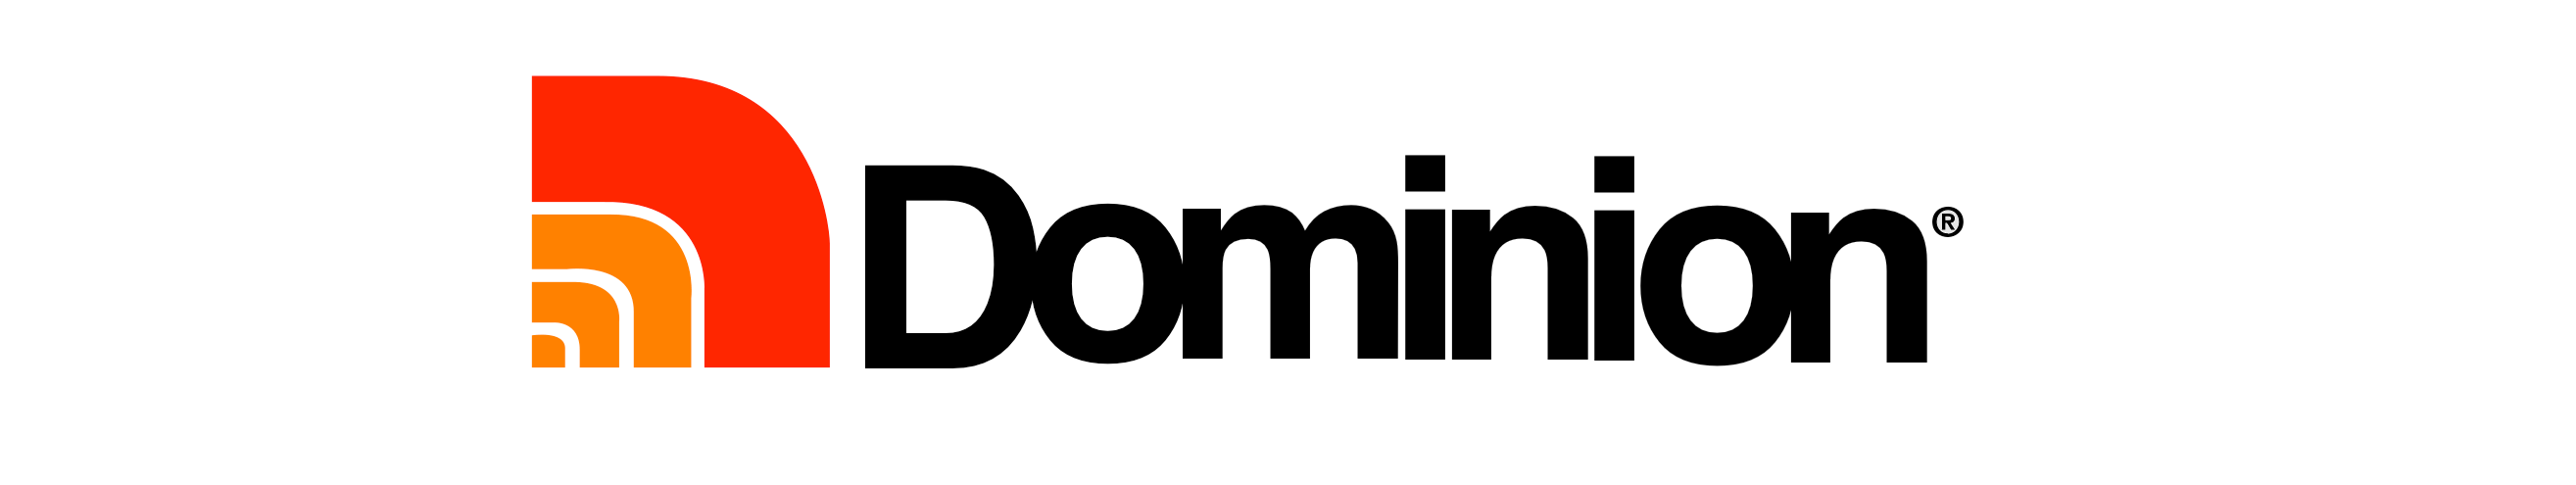 Dominion Logo1